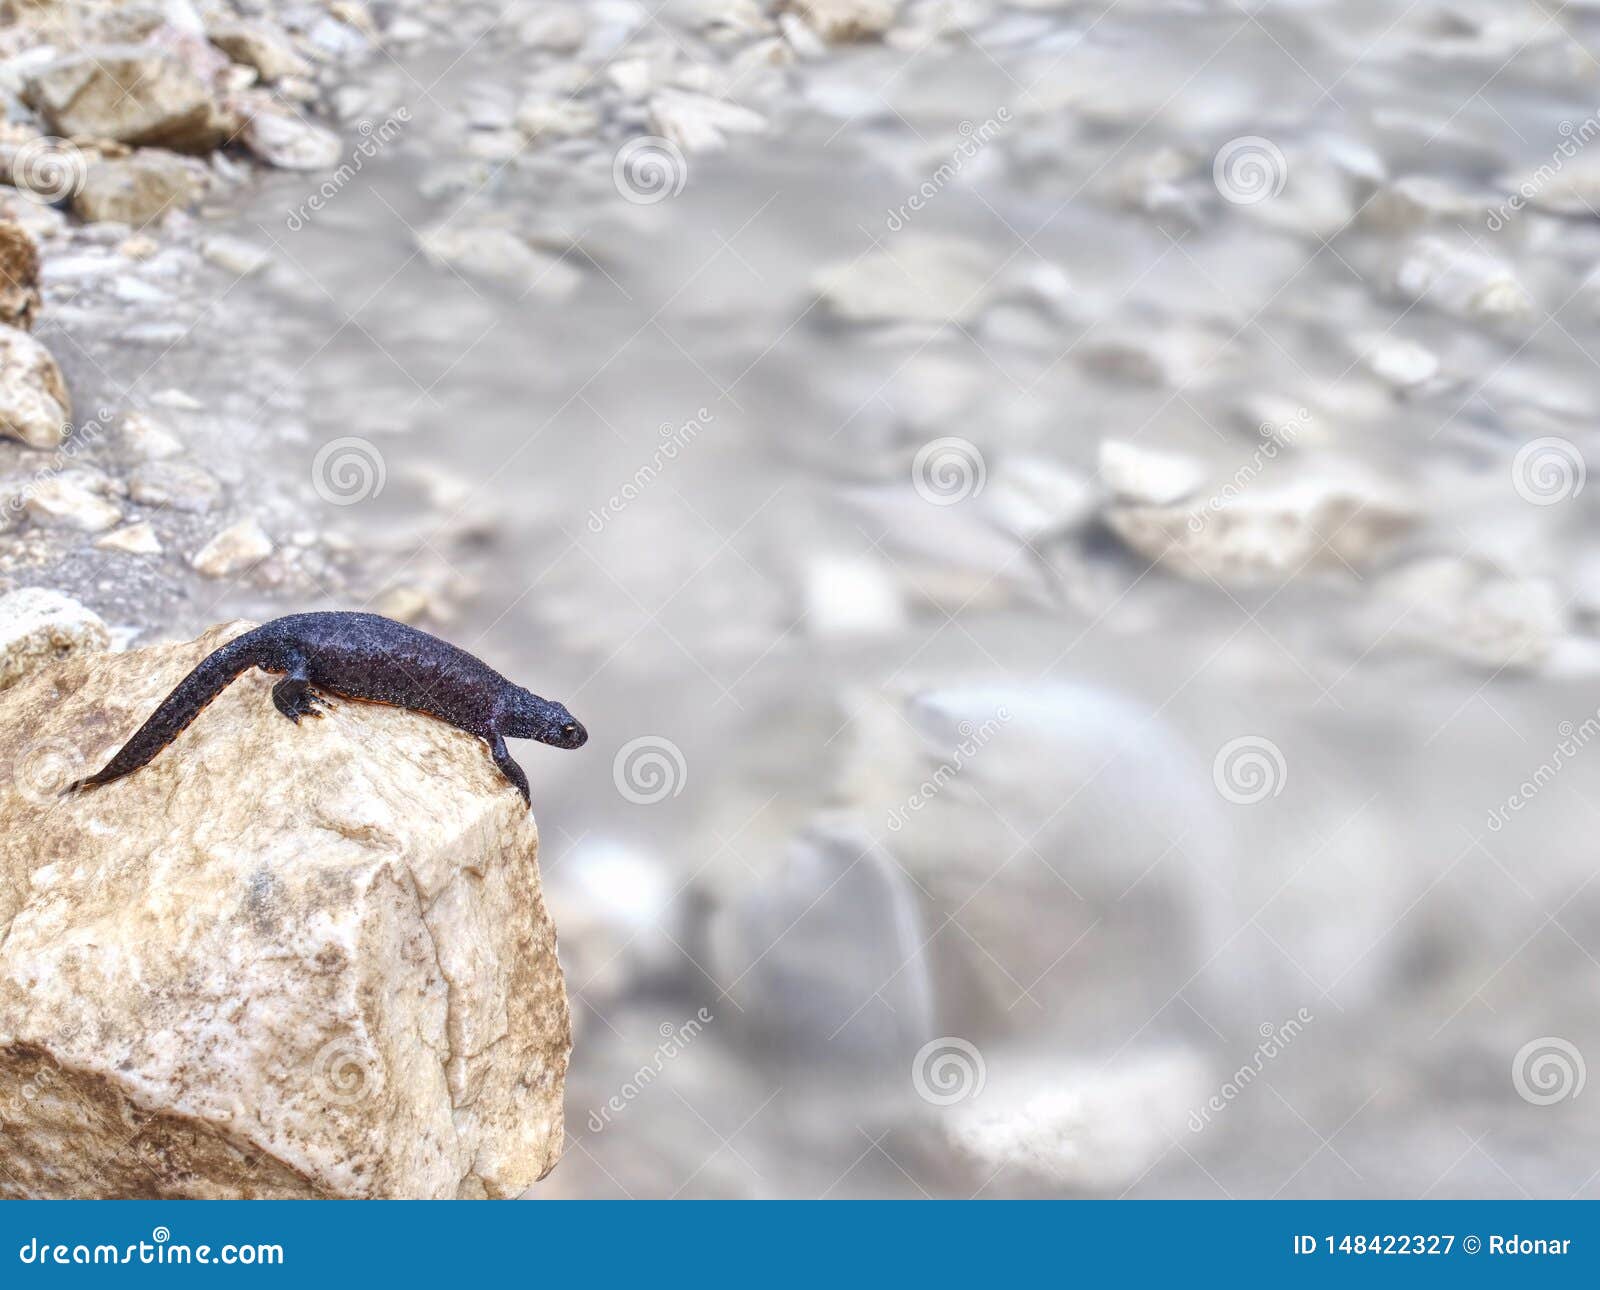 black salamander -  amphibian lying on the stone